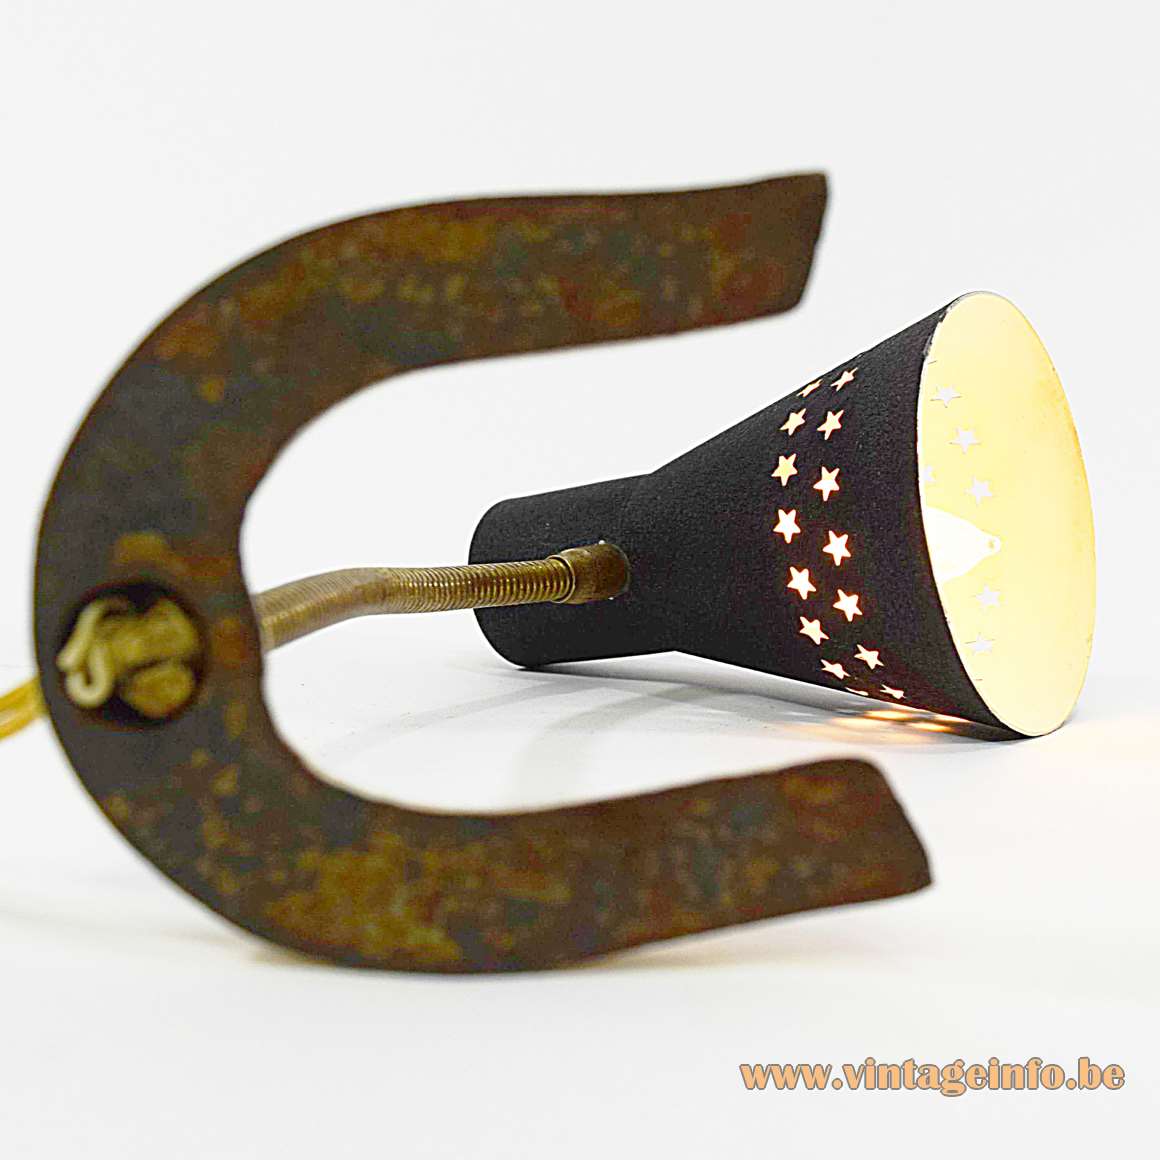 Perforated stars horseshoe desk lamp black conical lampshade brass goose-neck white cast iron base 1950s 1960s